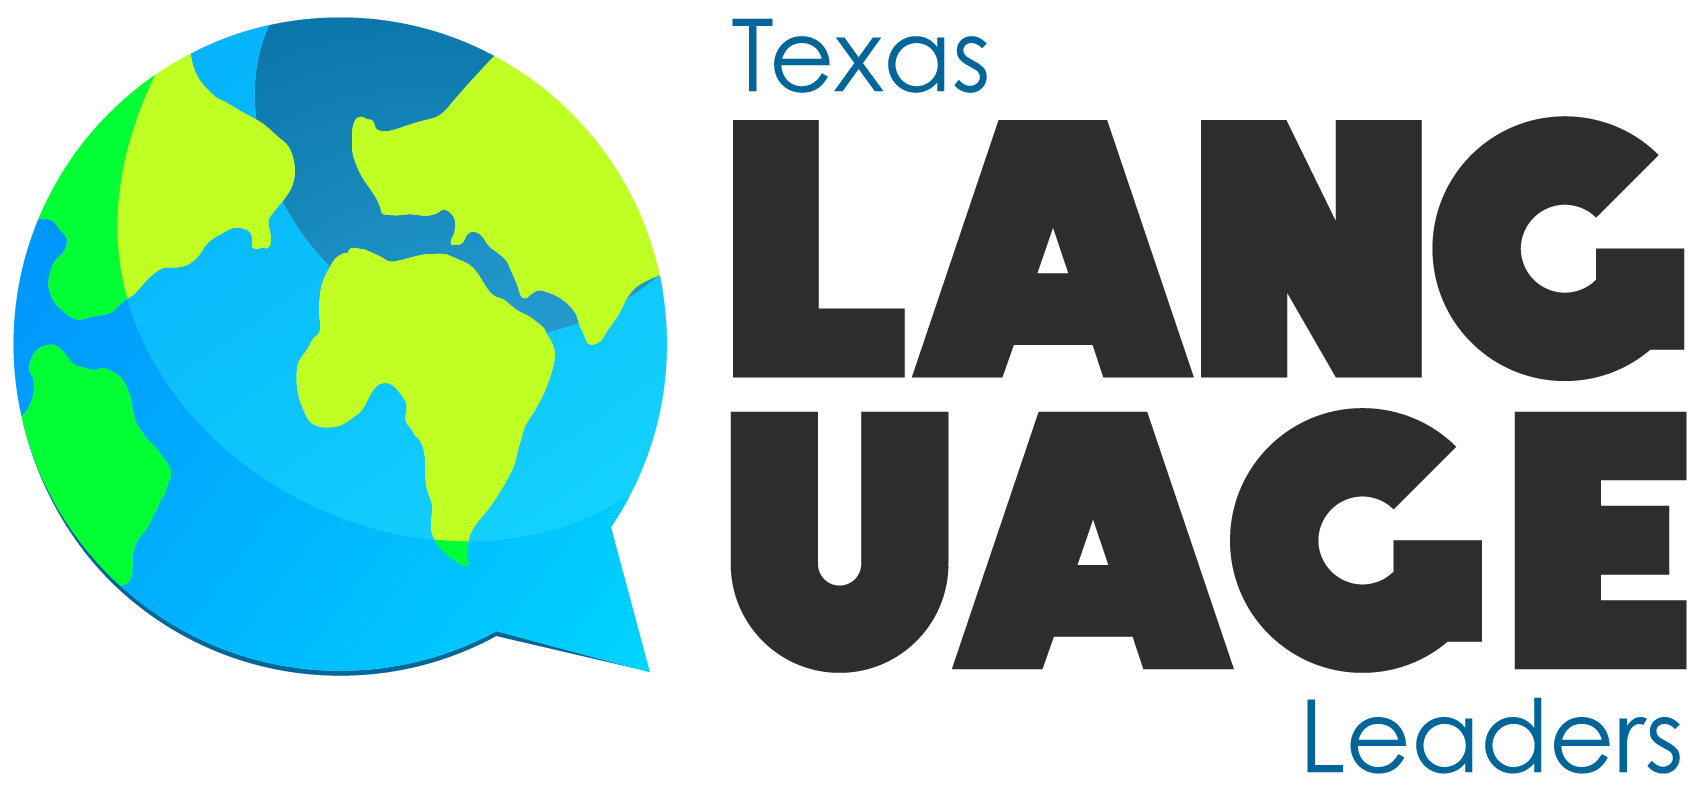 Texas Language Leaders logo with a globe speech bubble